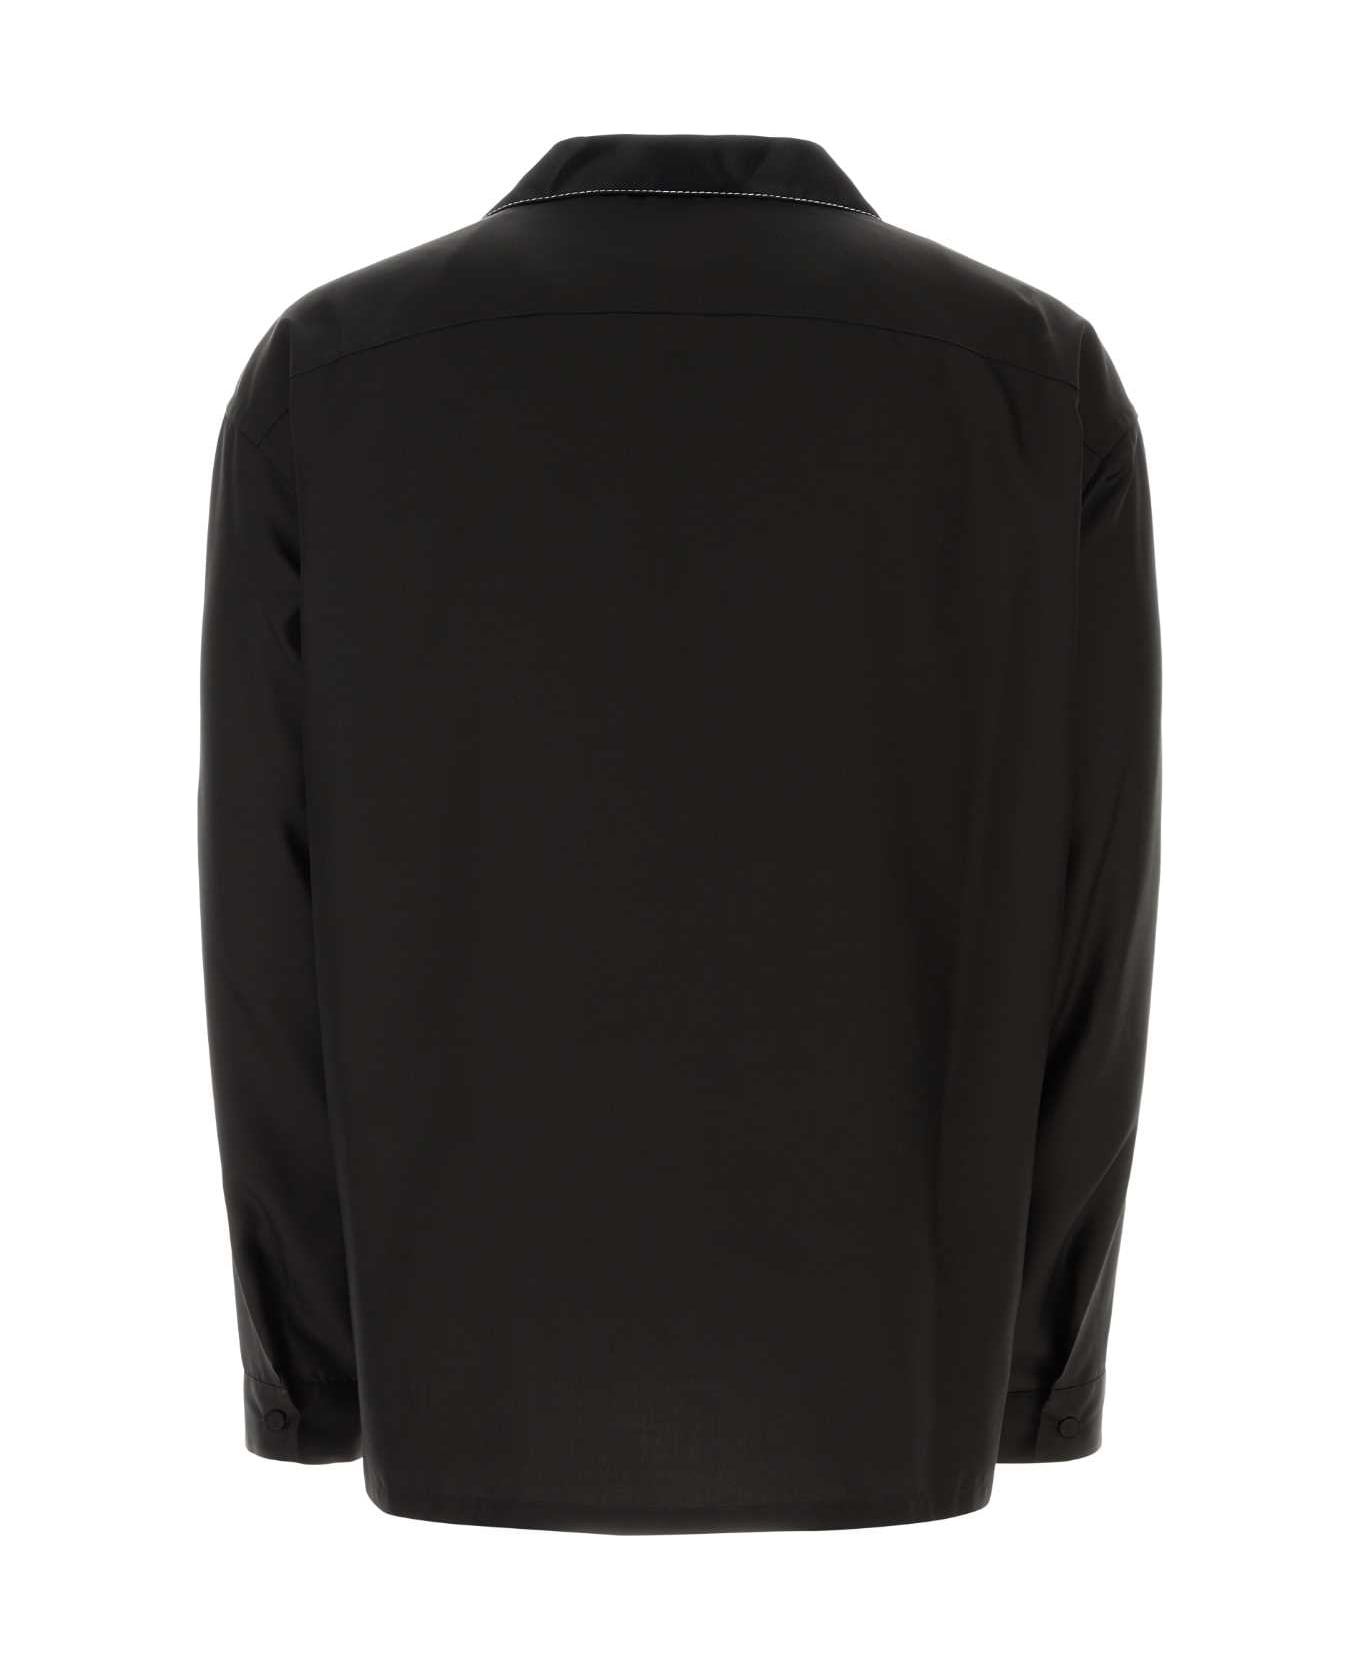 Prada Black Silk Shirt - NERO